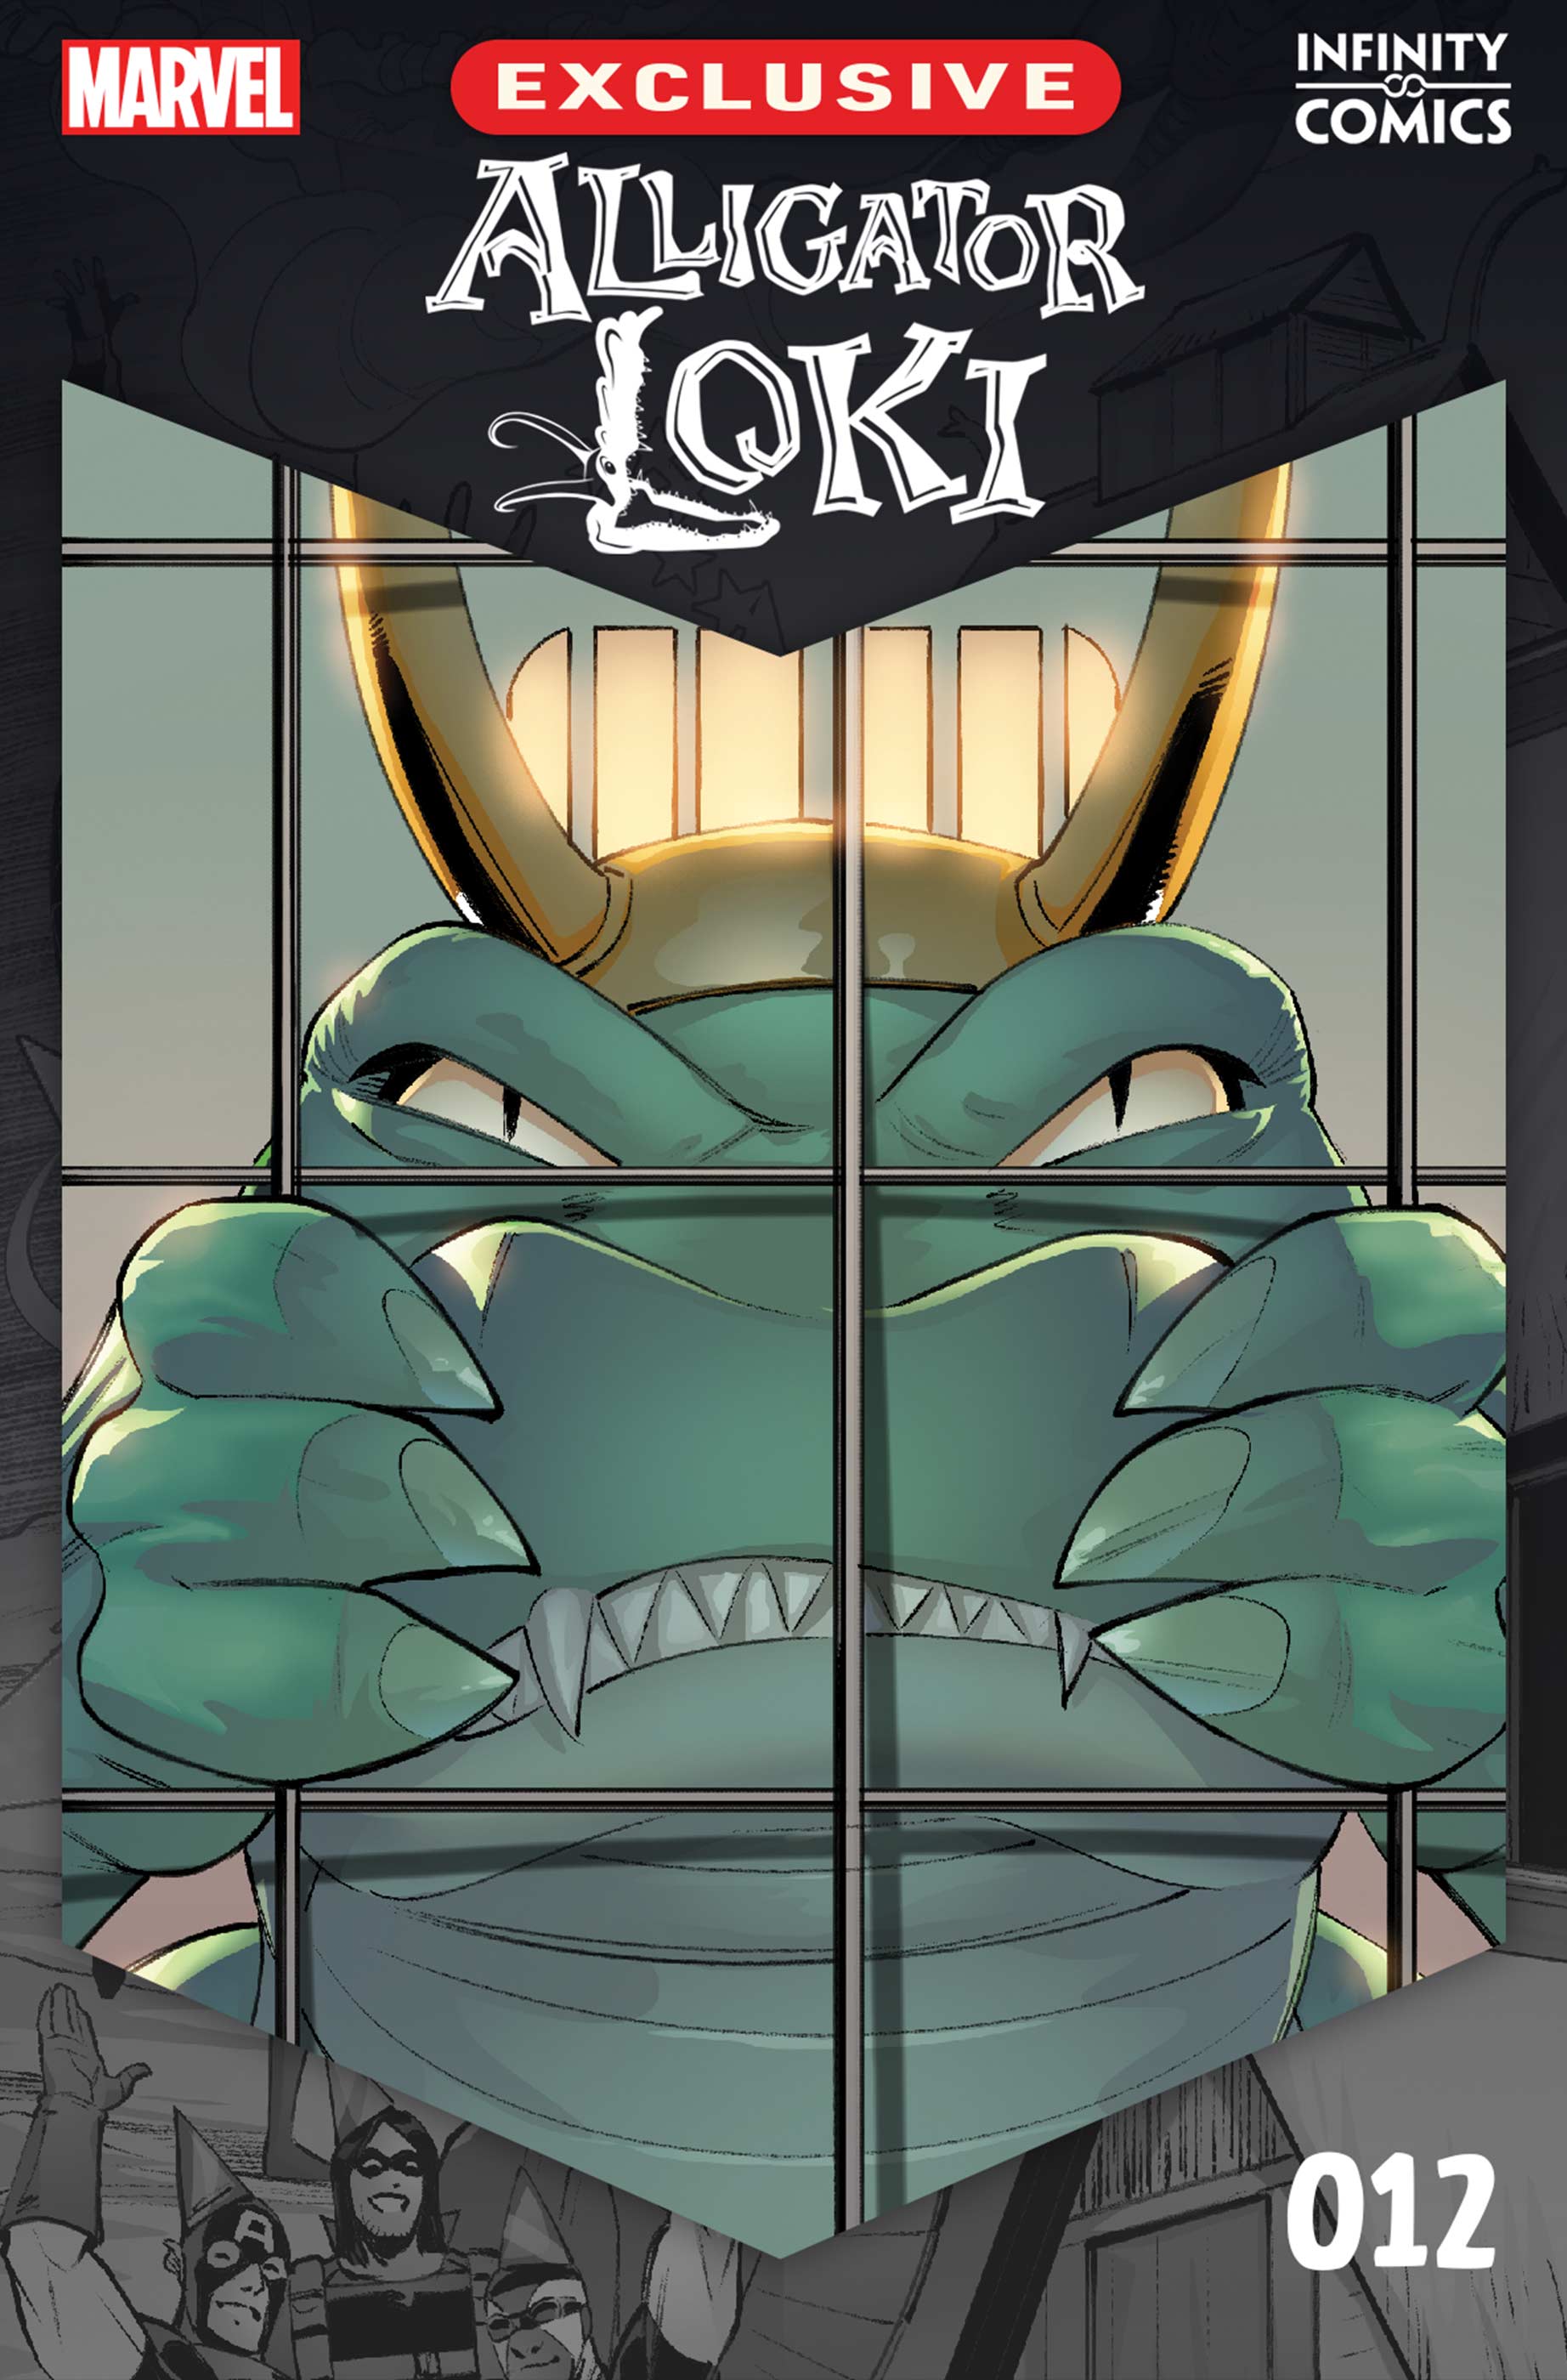 Alligator Loki Infinity Comic (2022) #12